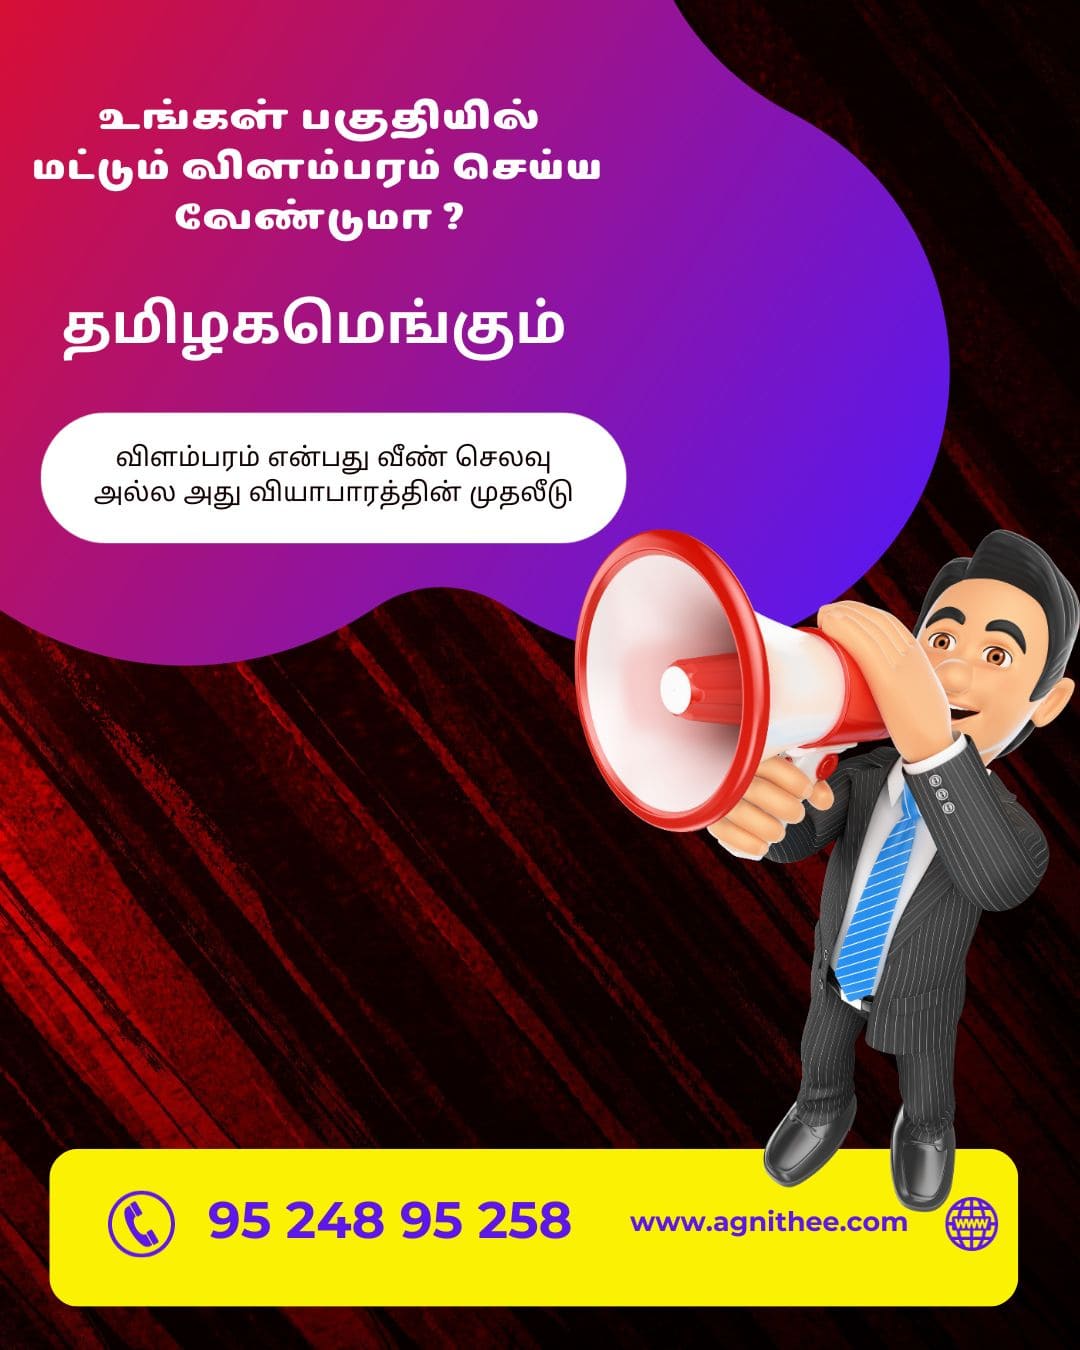 Local Ads Pollachi Election Advertising Bulk SMS Bulk Voice Call  